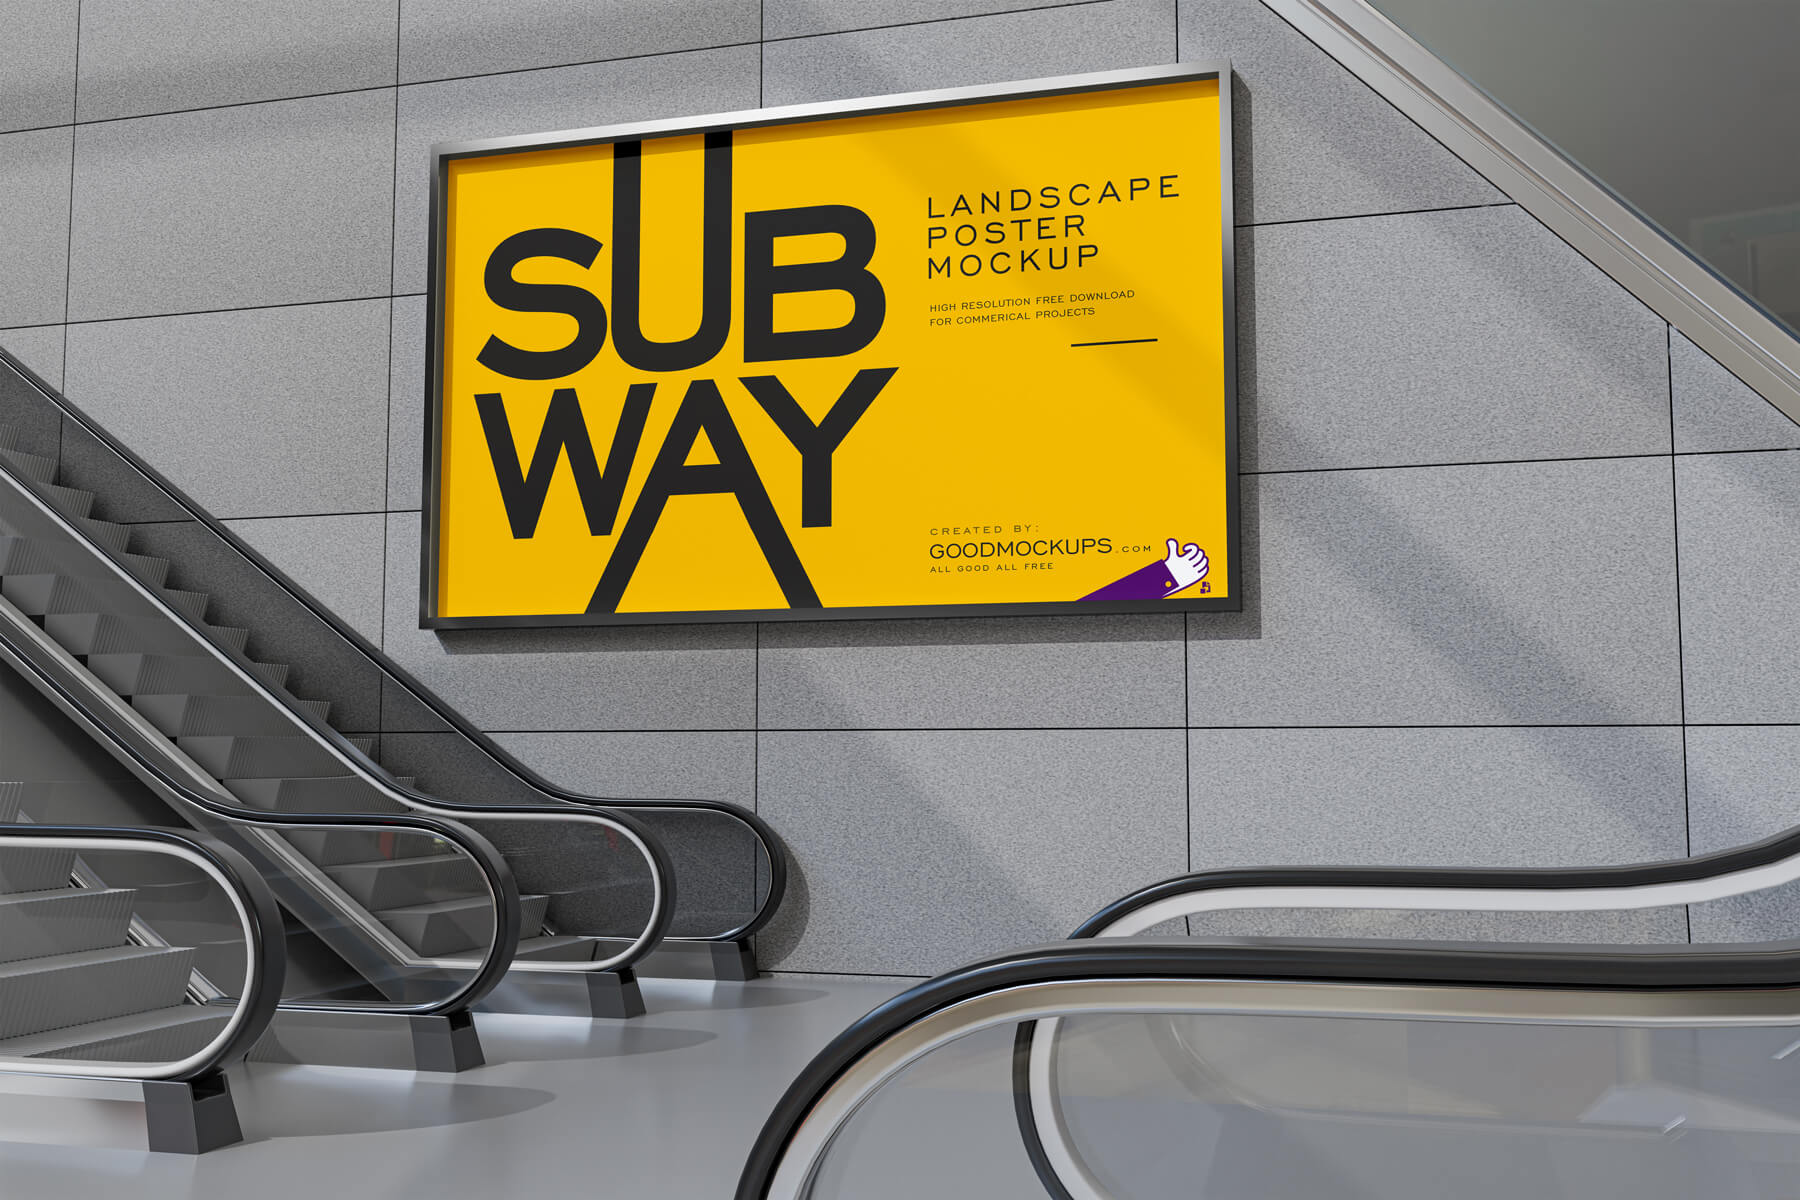 Free-Indoor-Advertising-Subway-Landscape-Poster-Mockup-PSD